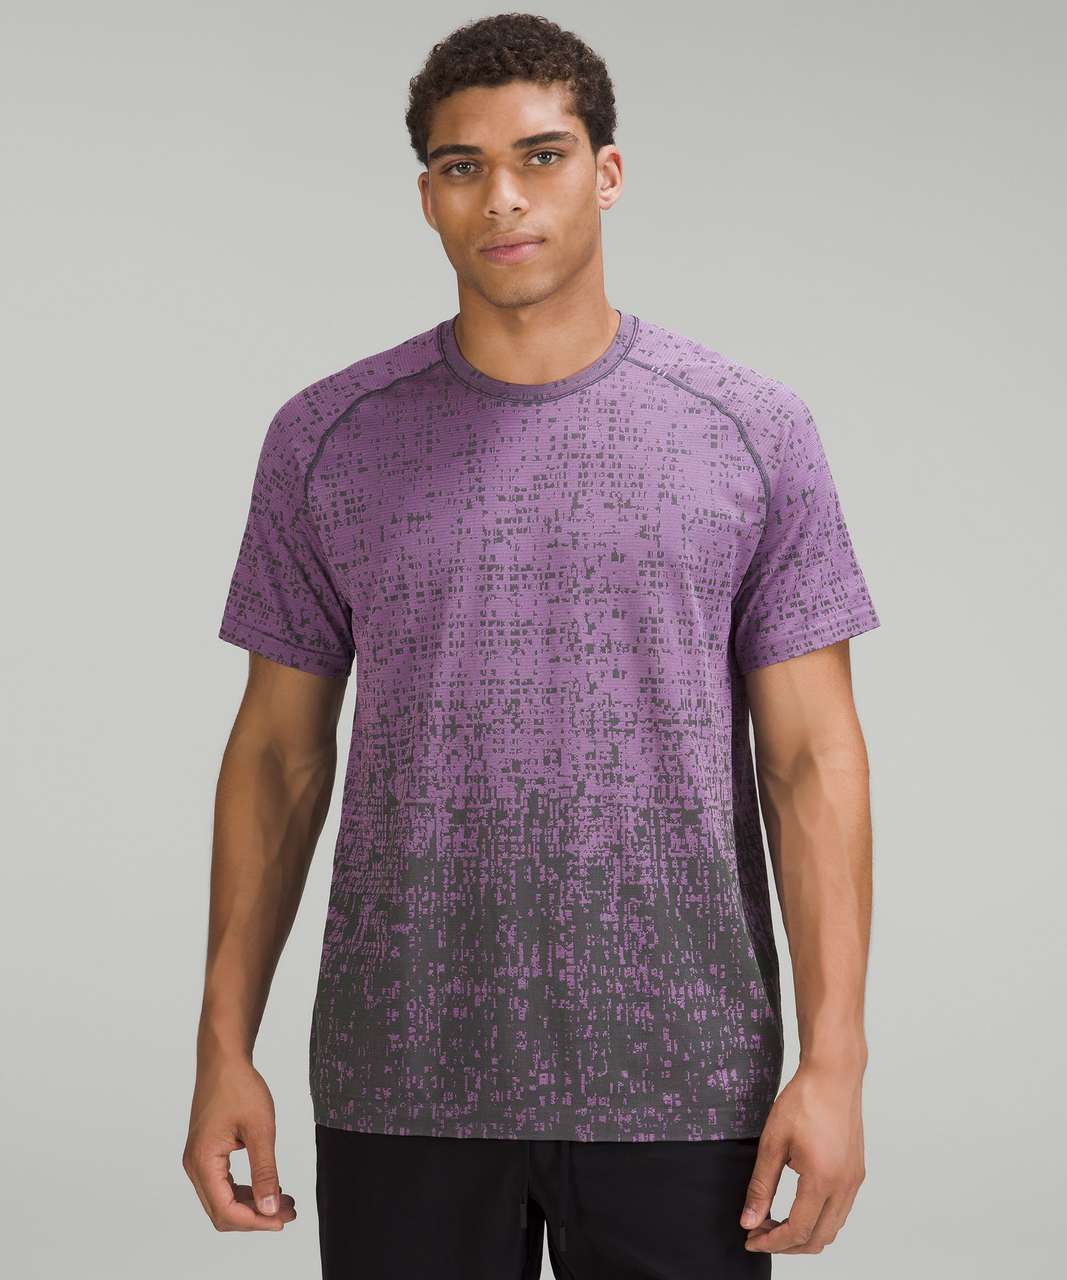 Lululemon Metal Vent Tech Short Sleeve Shirt 2.0 - Cube Calibrate Purple Blossom Light / Smoked Spruce